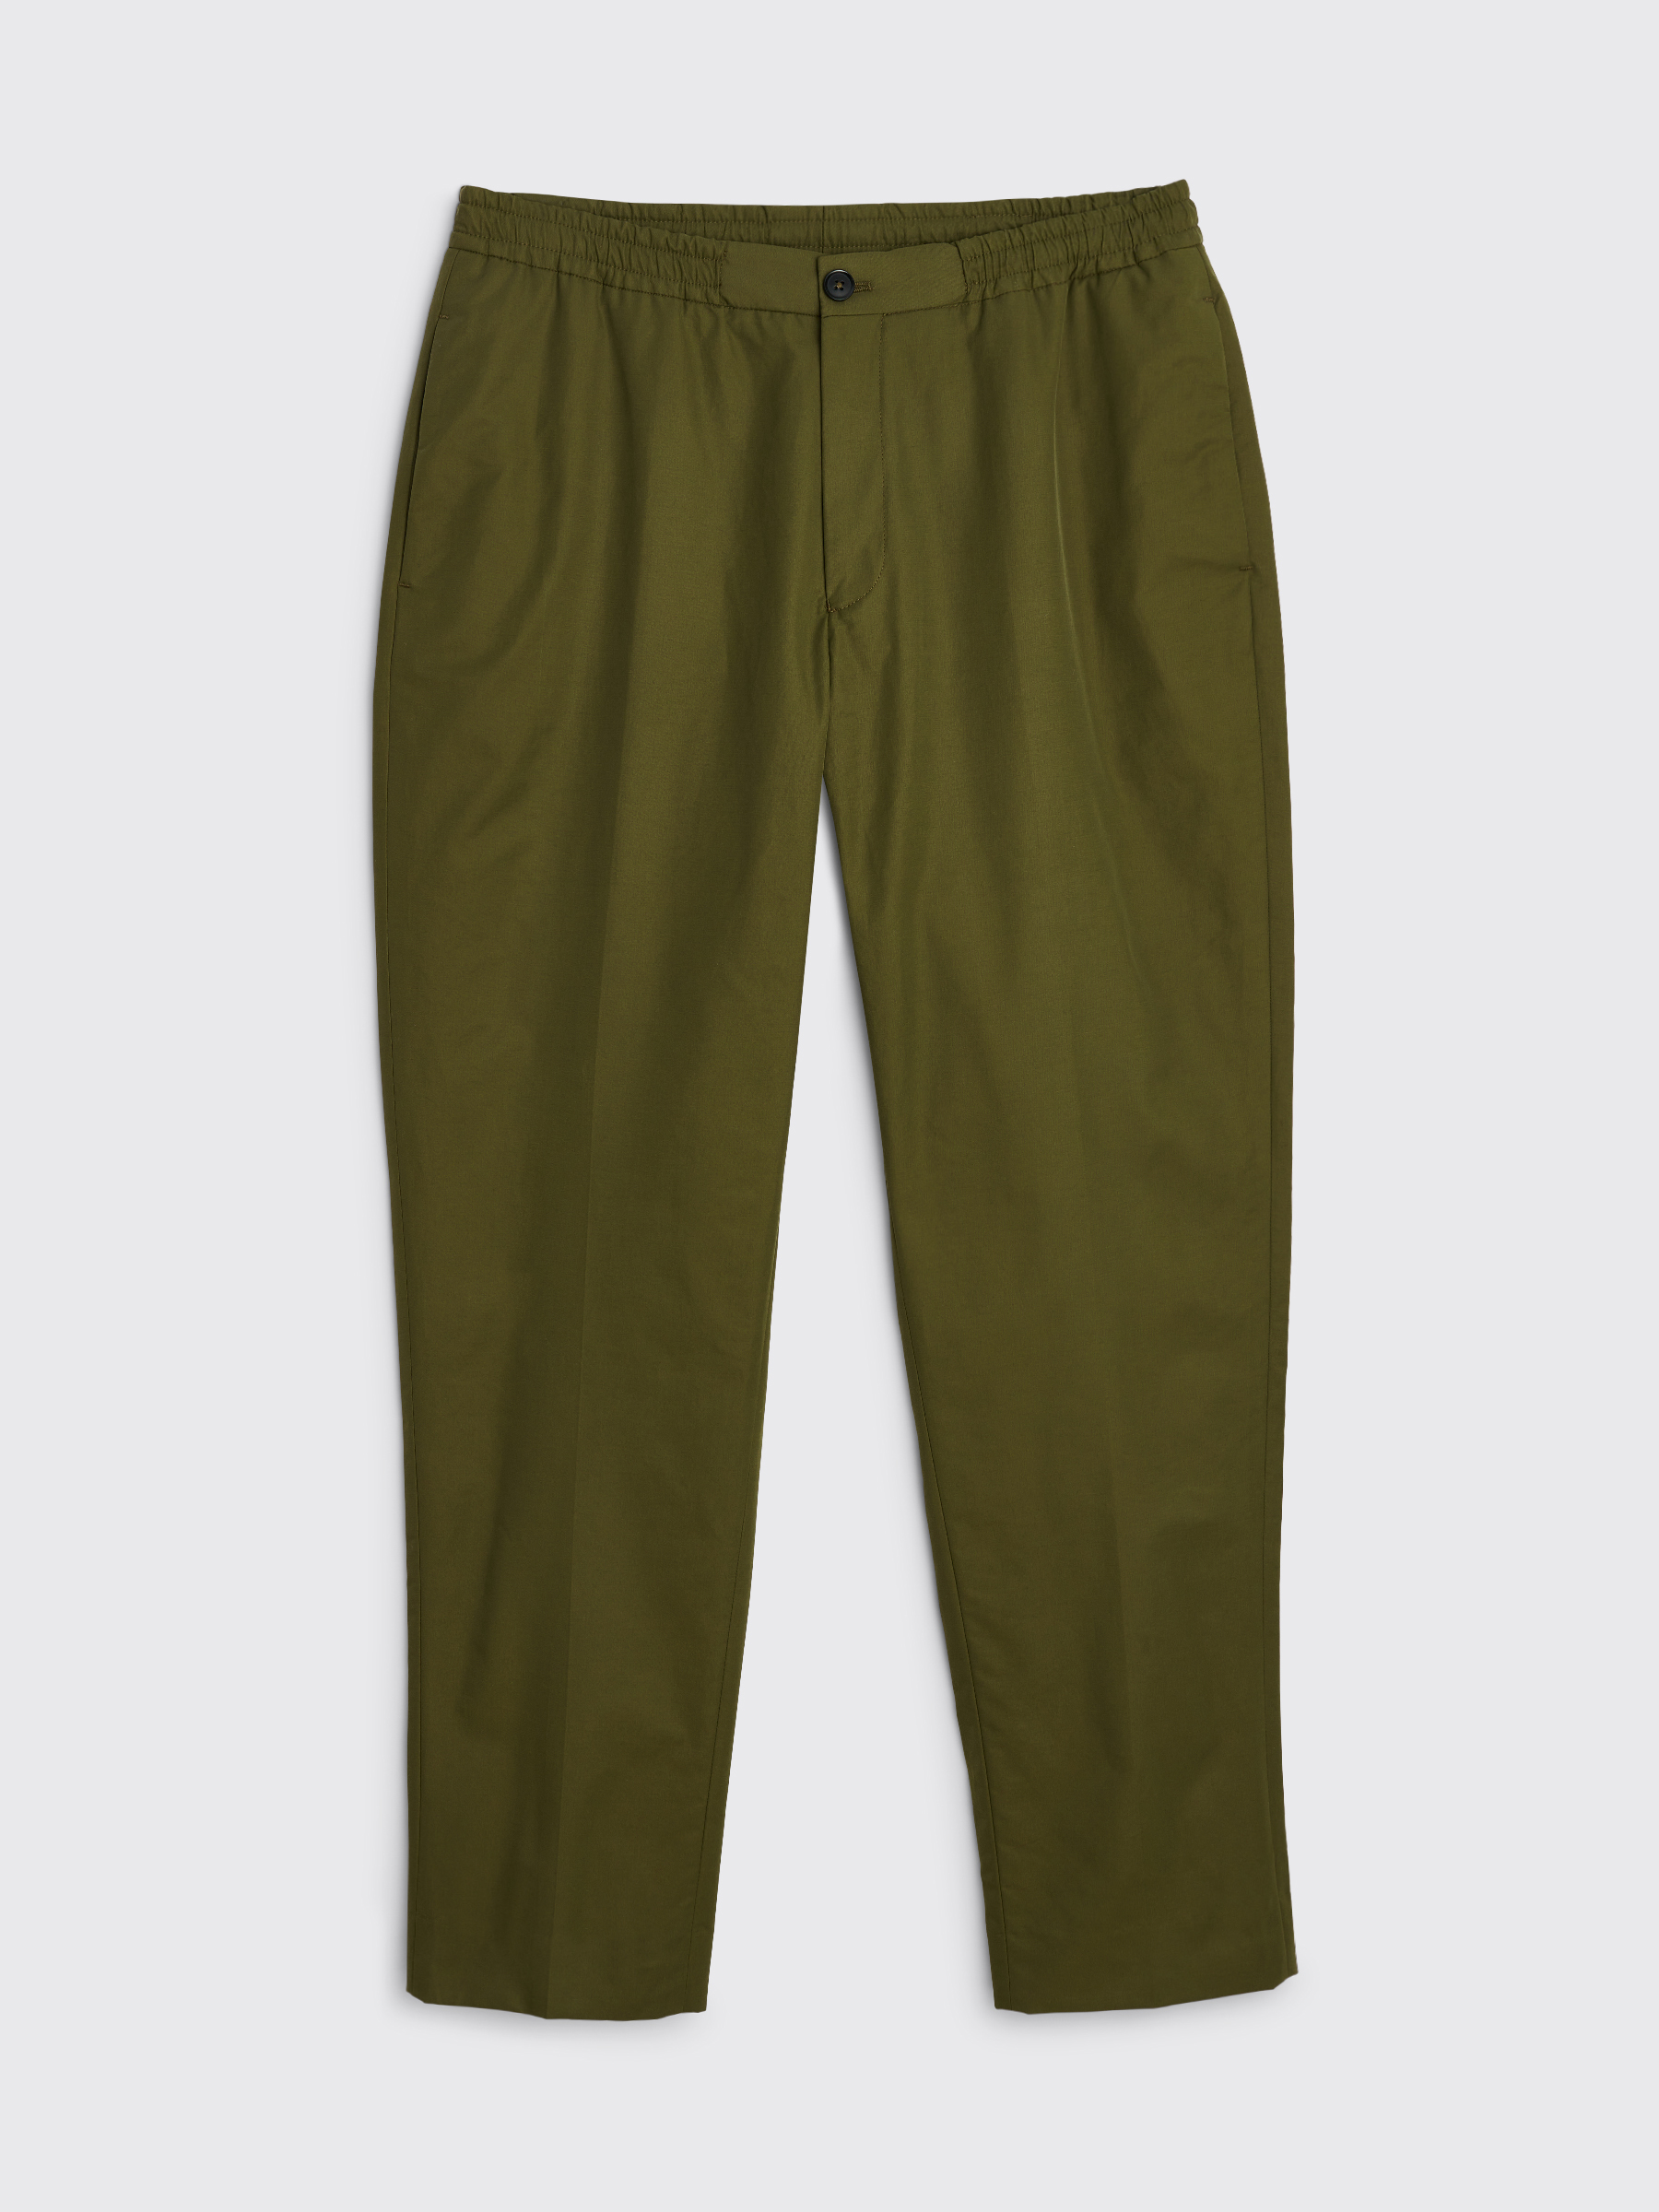 Très Bien - TRÈS BIEN Green Sport Drawstring Pants everywear